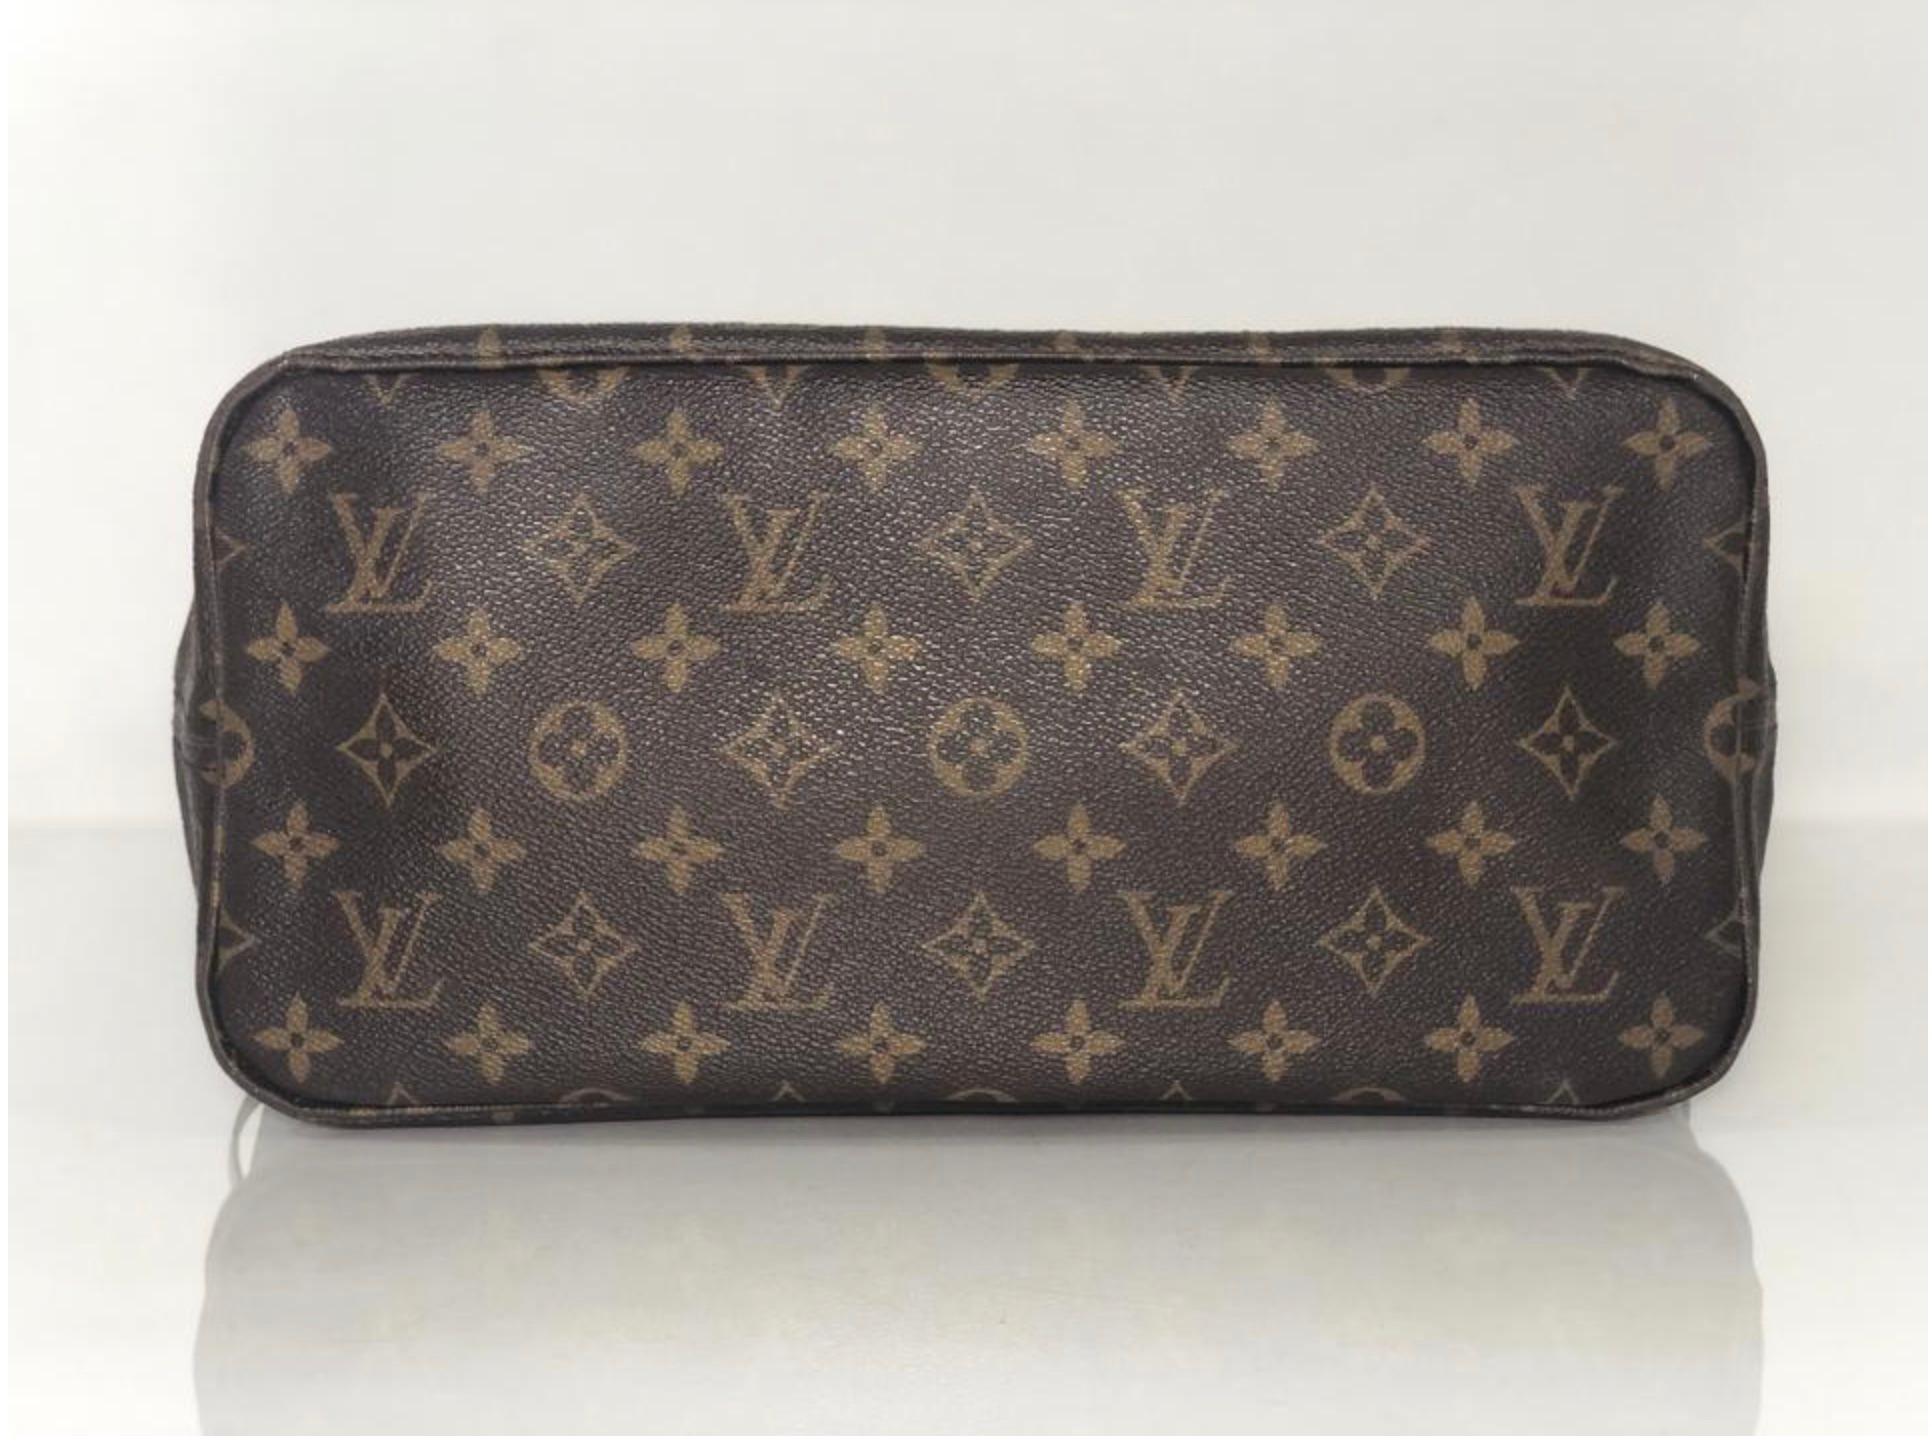  Louis Vuitton Monogram Neverfull MM Tote Shoulder Handbag For Sale 2